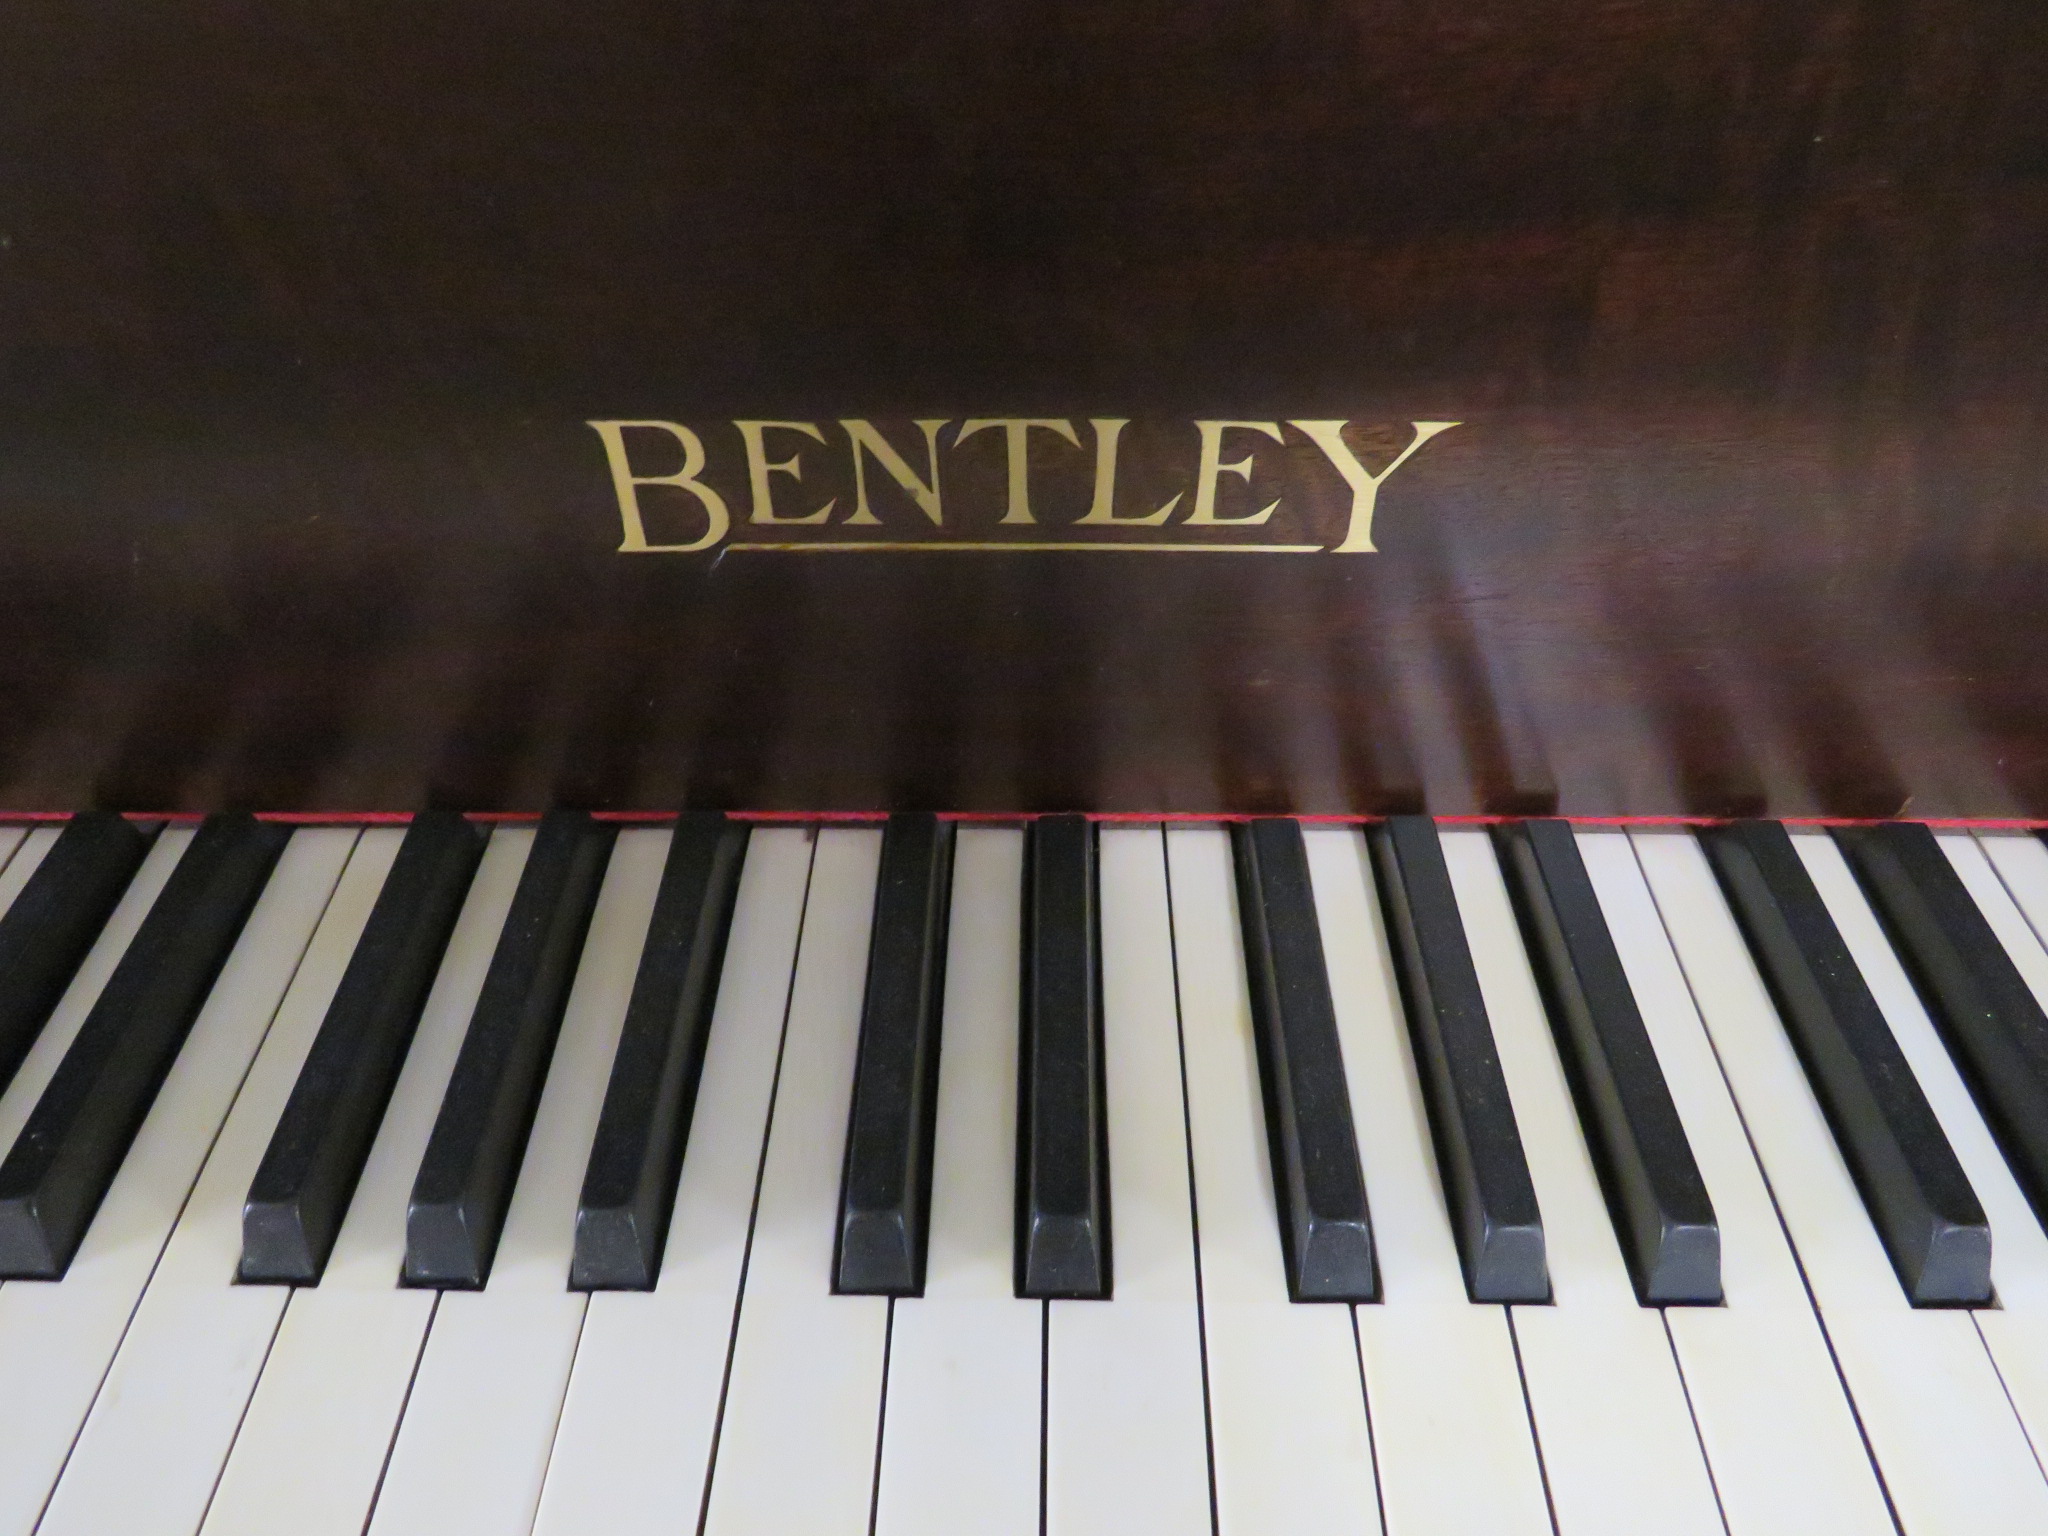 BENTLEY UPRIGHT PIANO IN MAHOGANY VENEERED CASE - Image 3 of 3